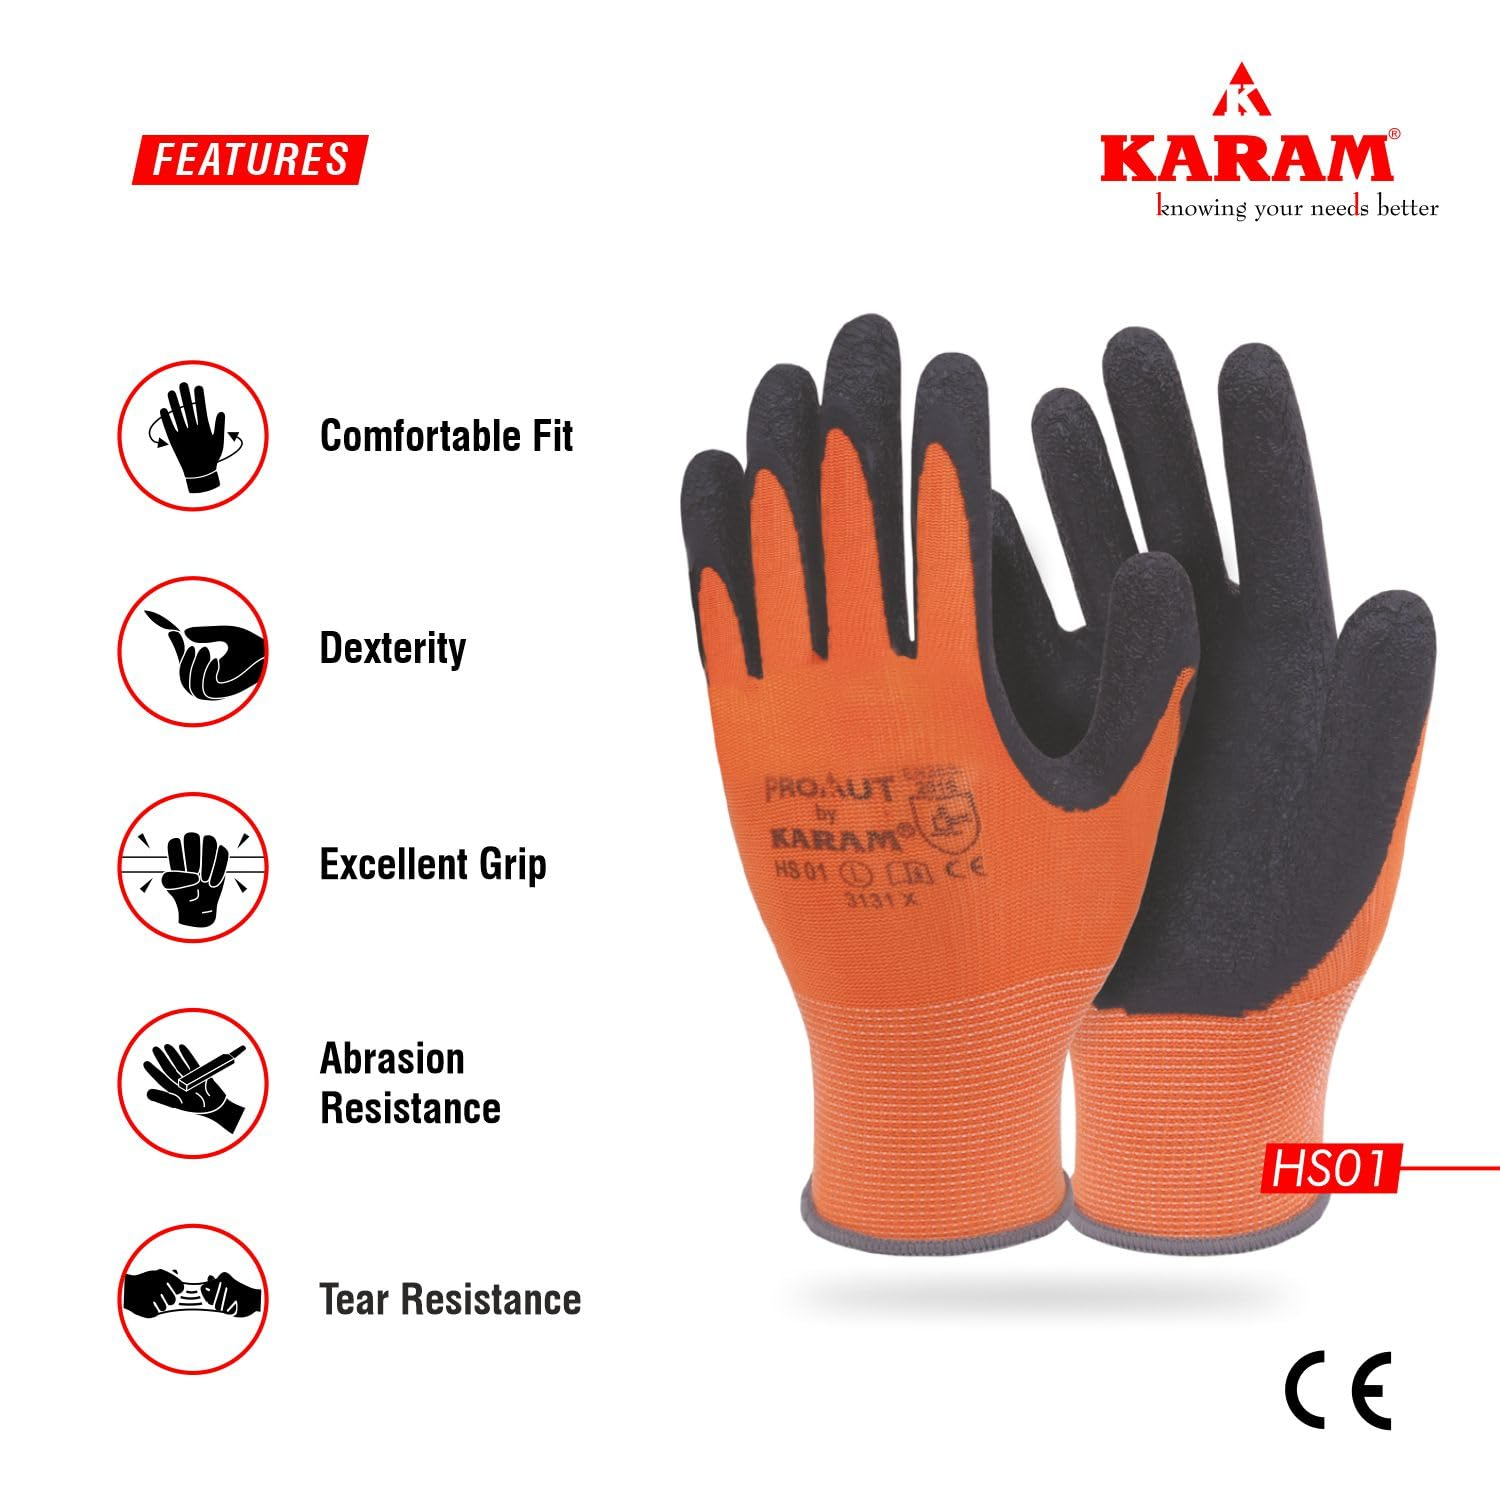 Karam Safety gloves hs 01 3